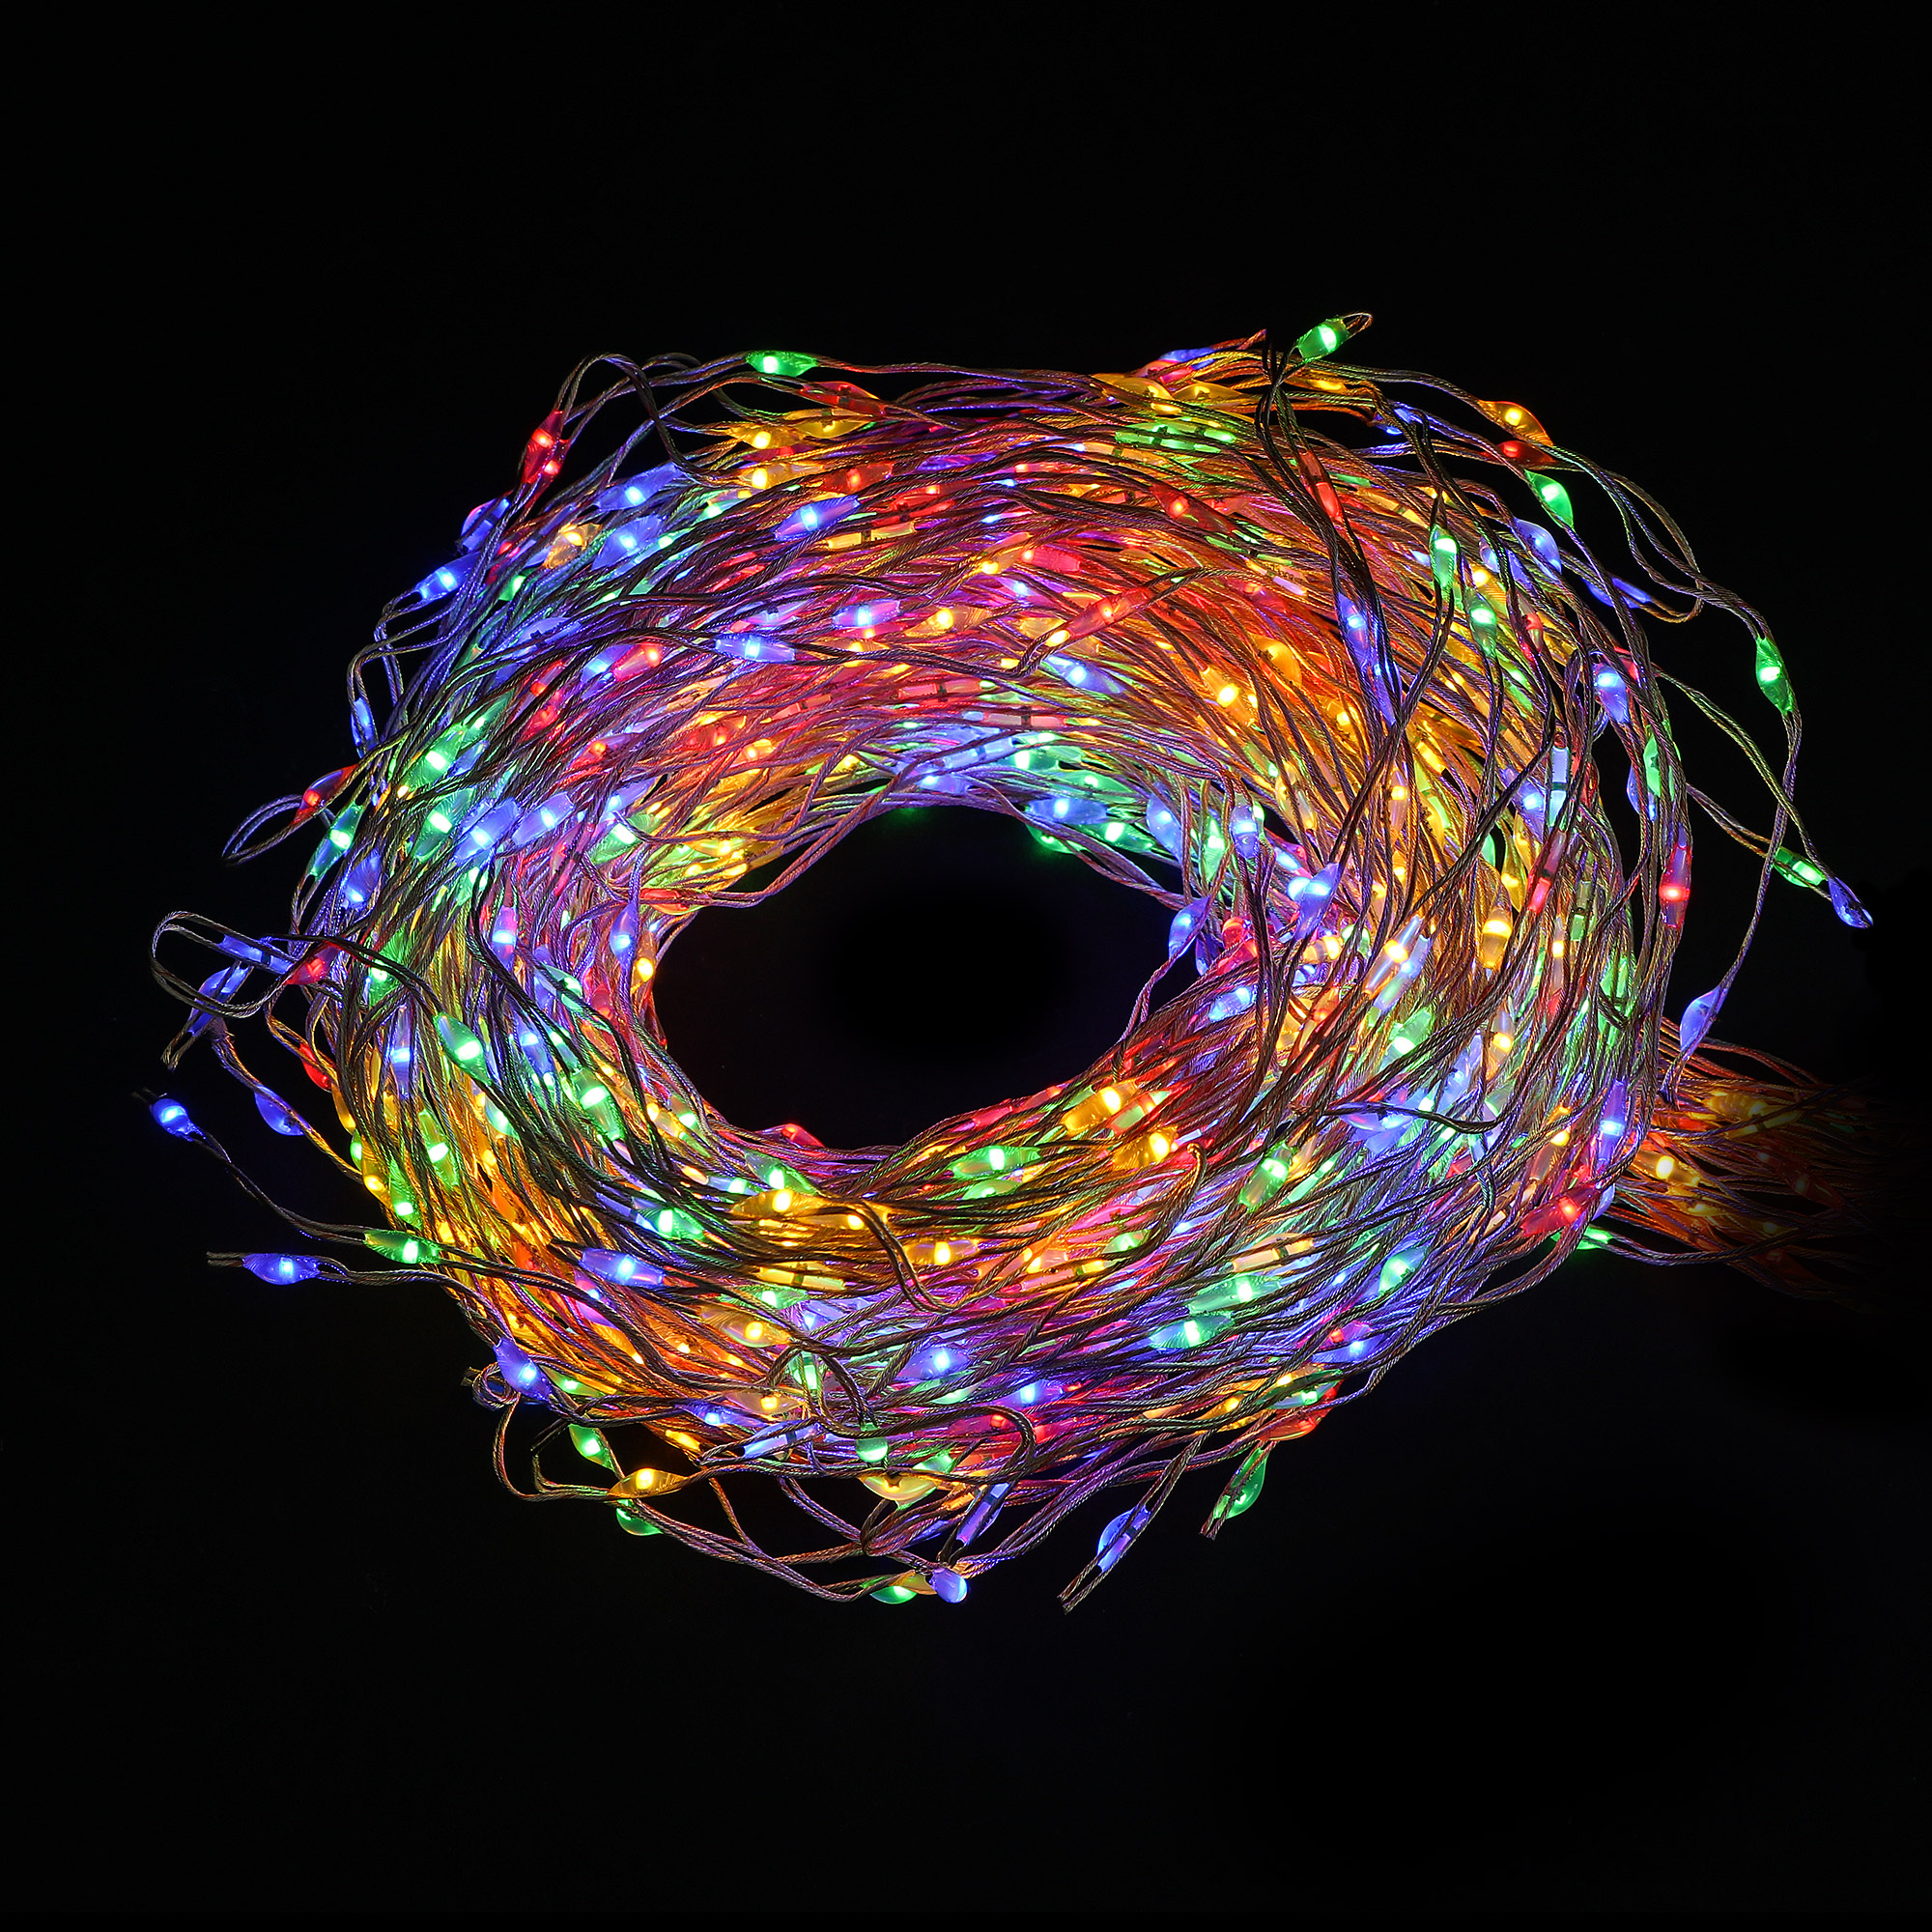 Электрогирлянда штора Best technology 1200 led разноцветный со стартовым шнуром - фото 3